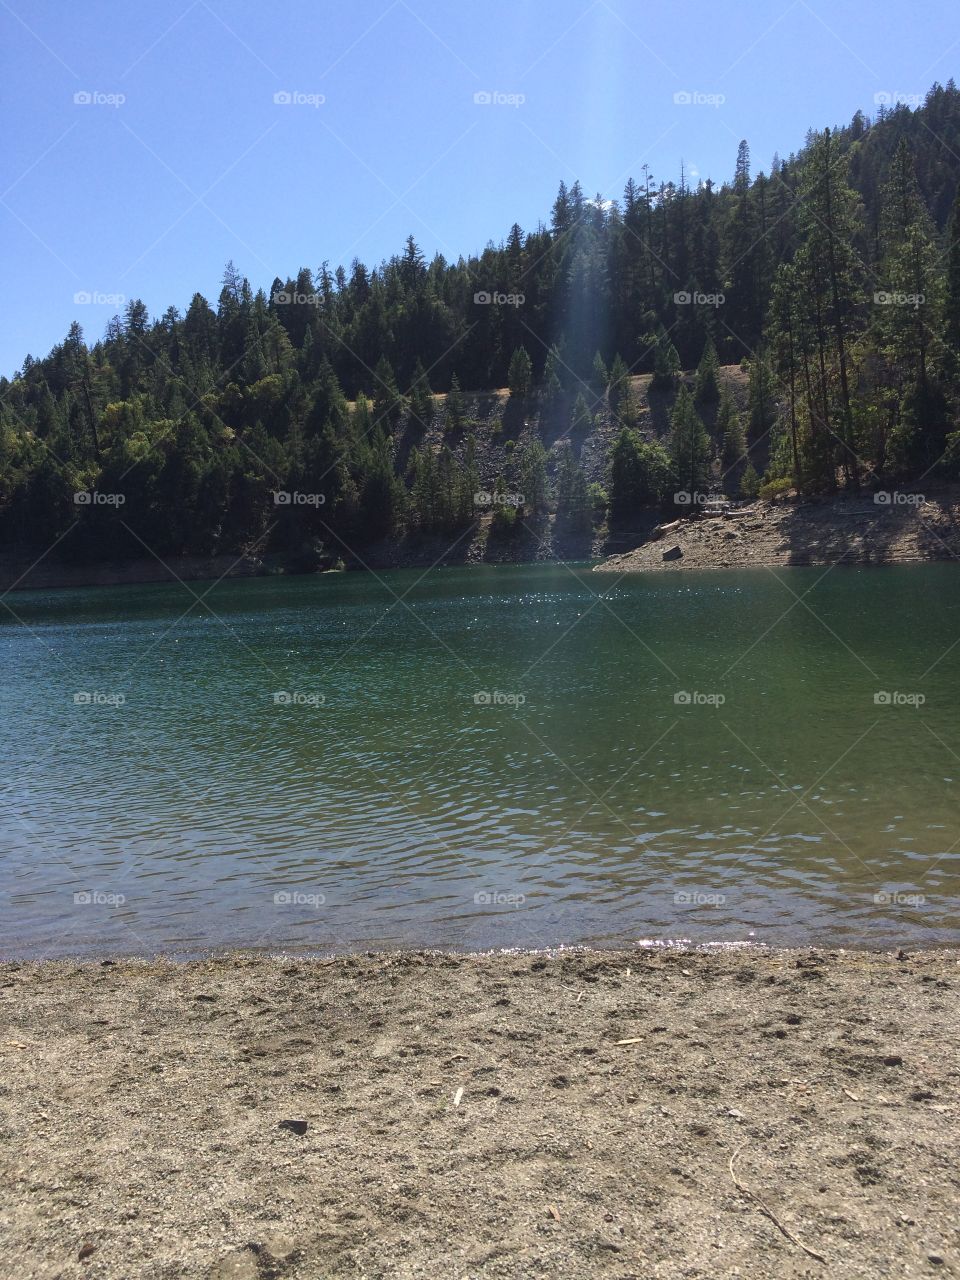 Applegate Oregon swimming hole. 